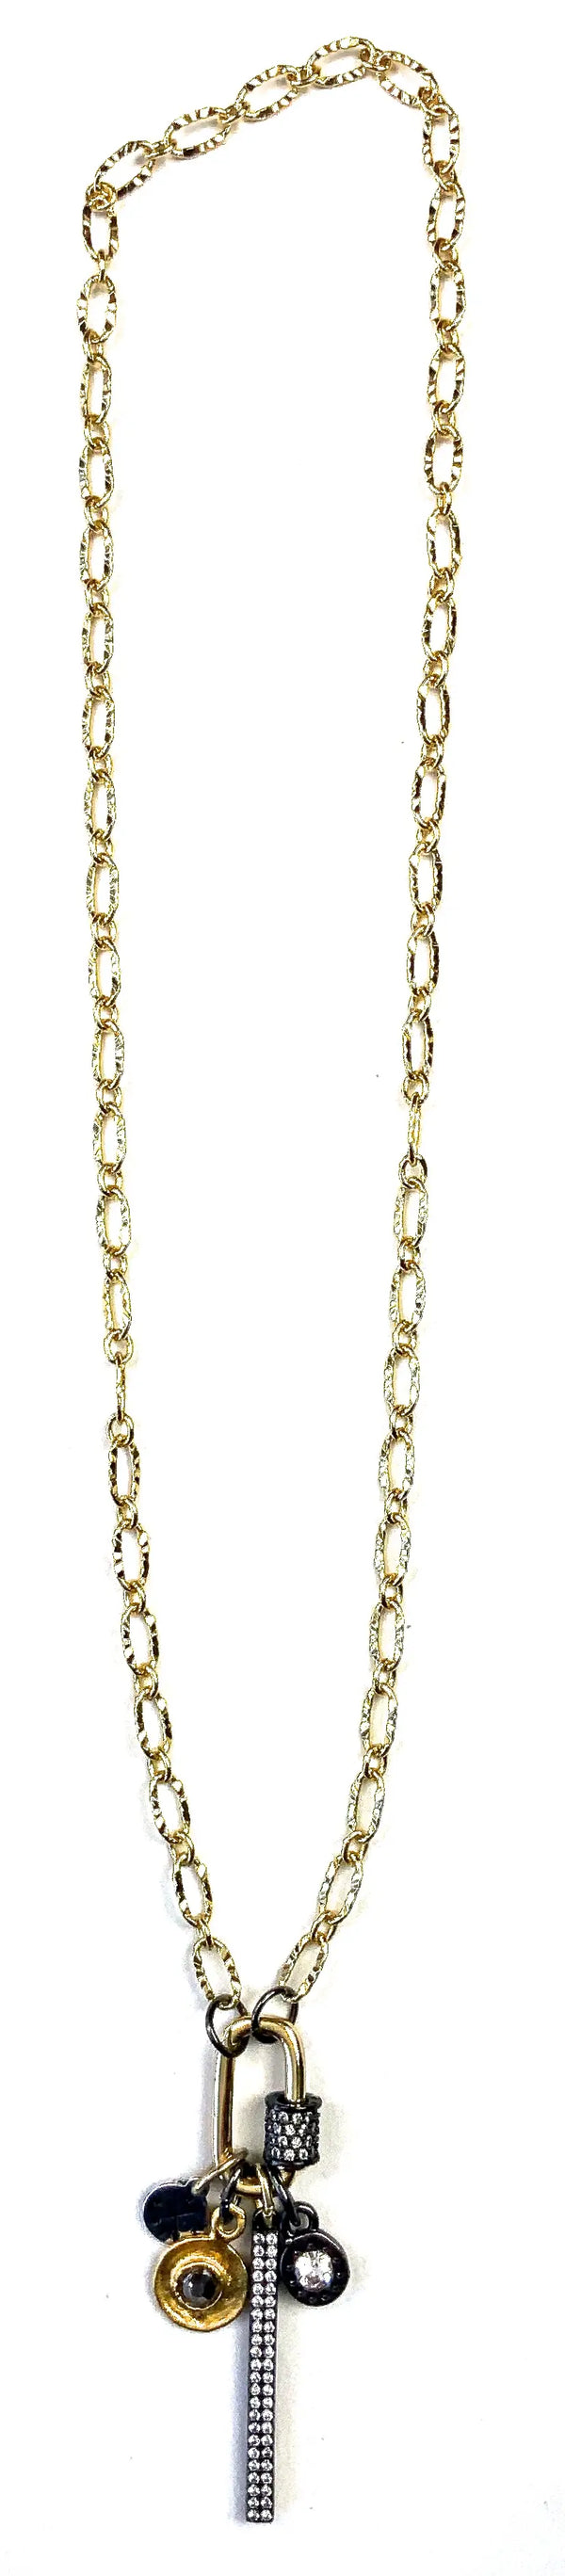 Black + Gold Carabiner Charm Necklace